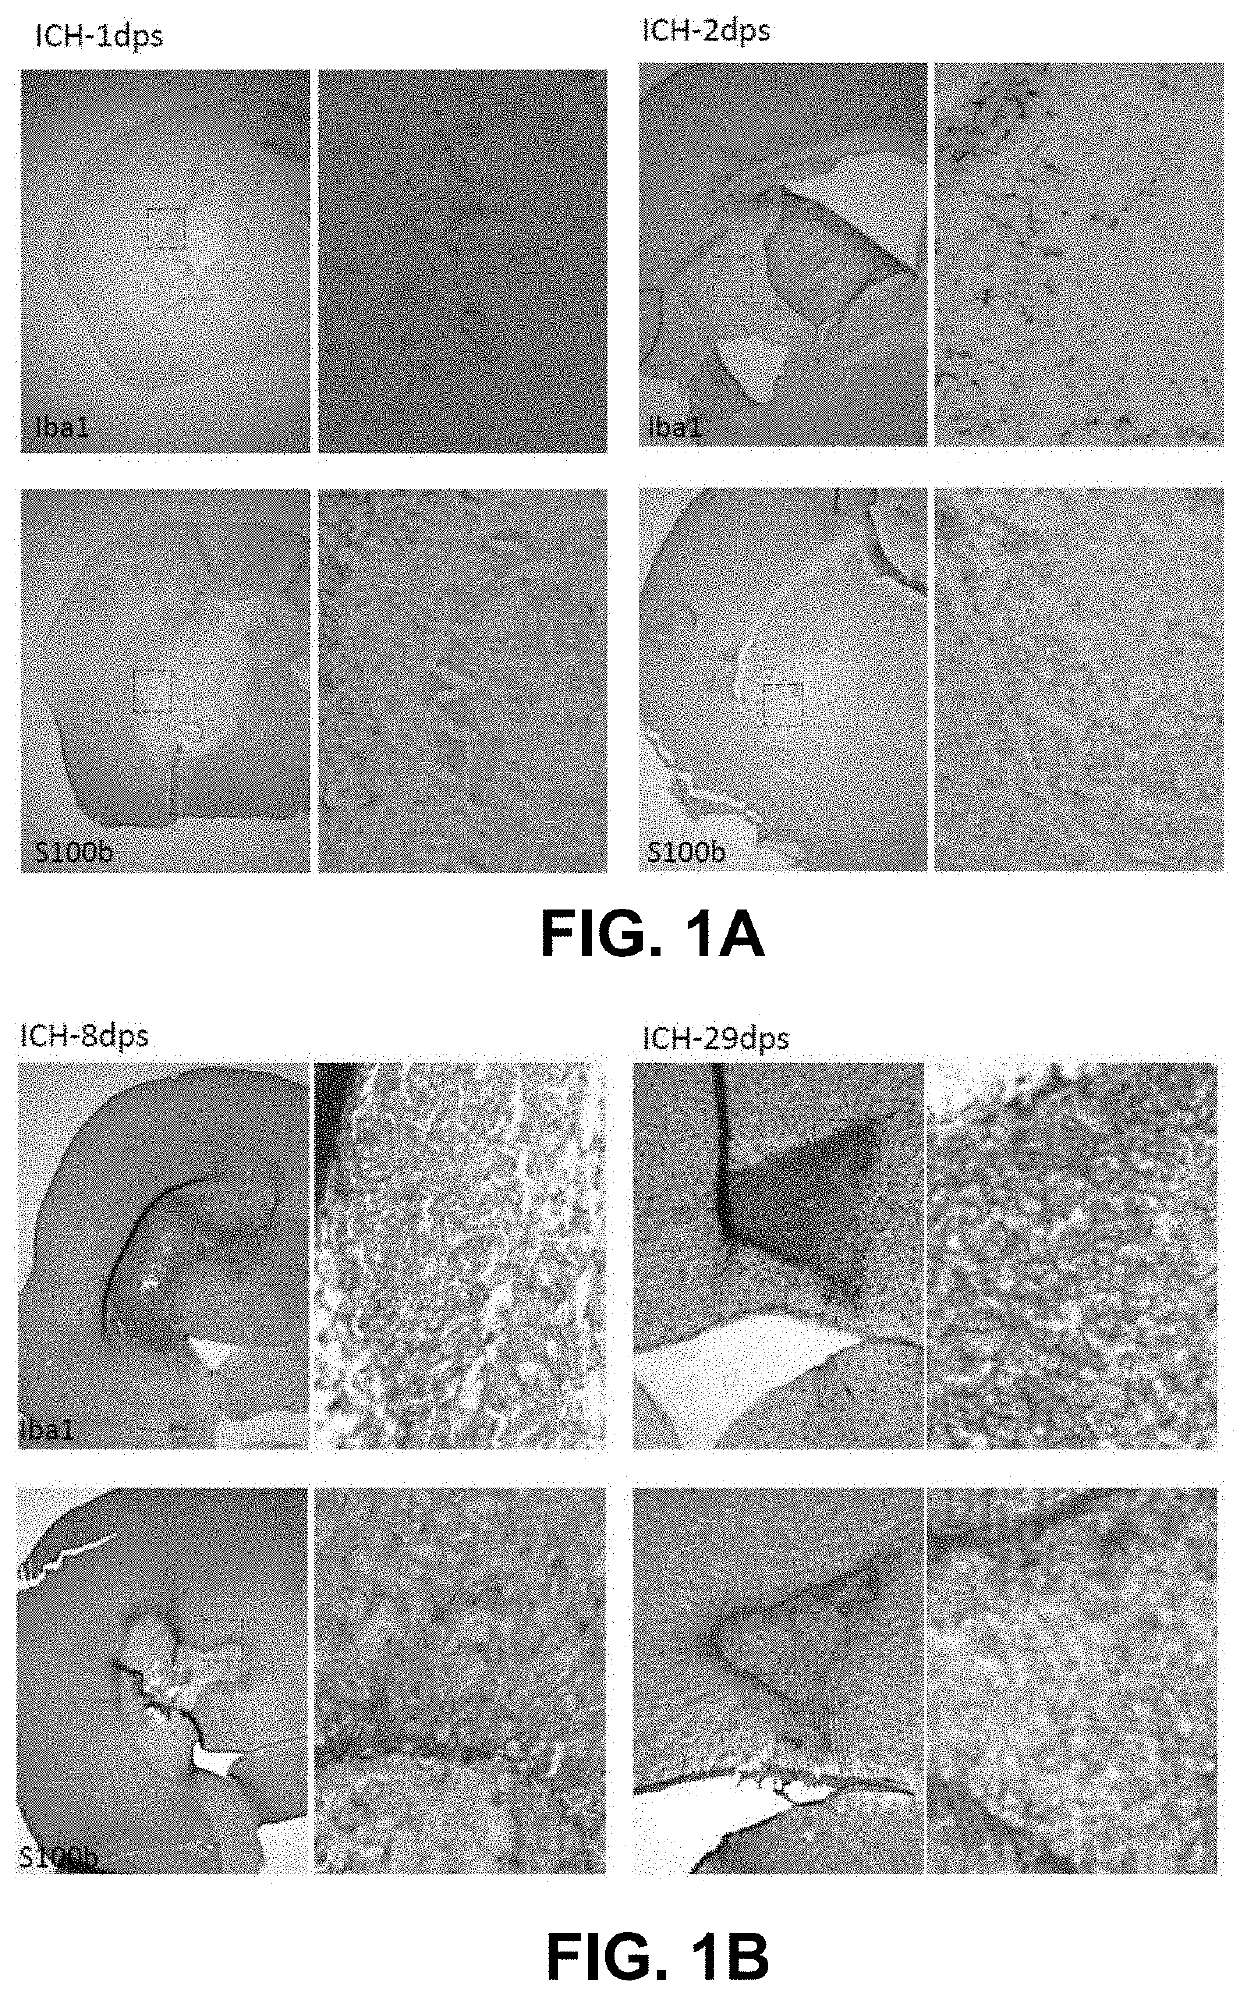 Regenerating functional neurons for treatment of hemorrhagic stroke